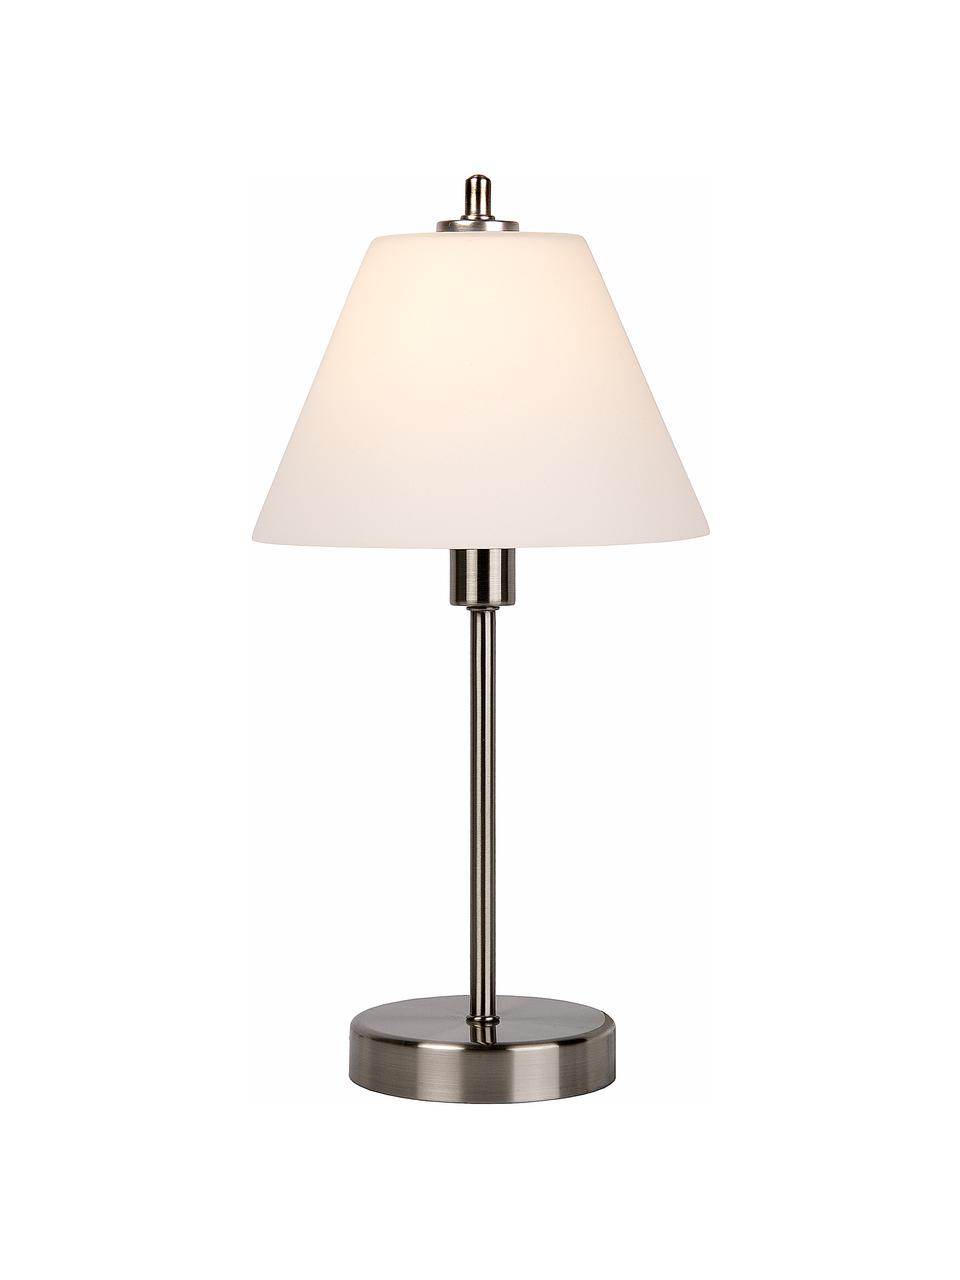 Dimmbare Tischlampe Touch mit Glasschirm, Lampenschirm: Opalglas, Lampenfuß: Metall, Chrom, satiniert, Opalweiß, Ø 22 x H 42 cm